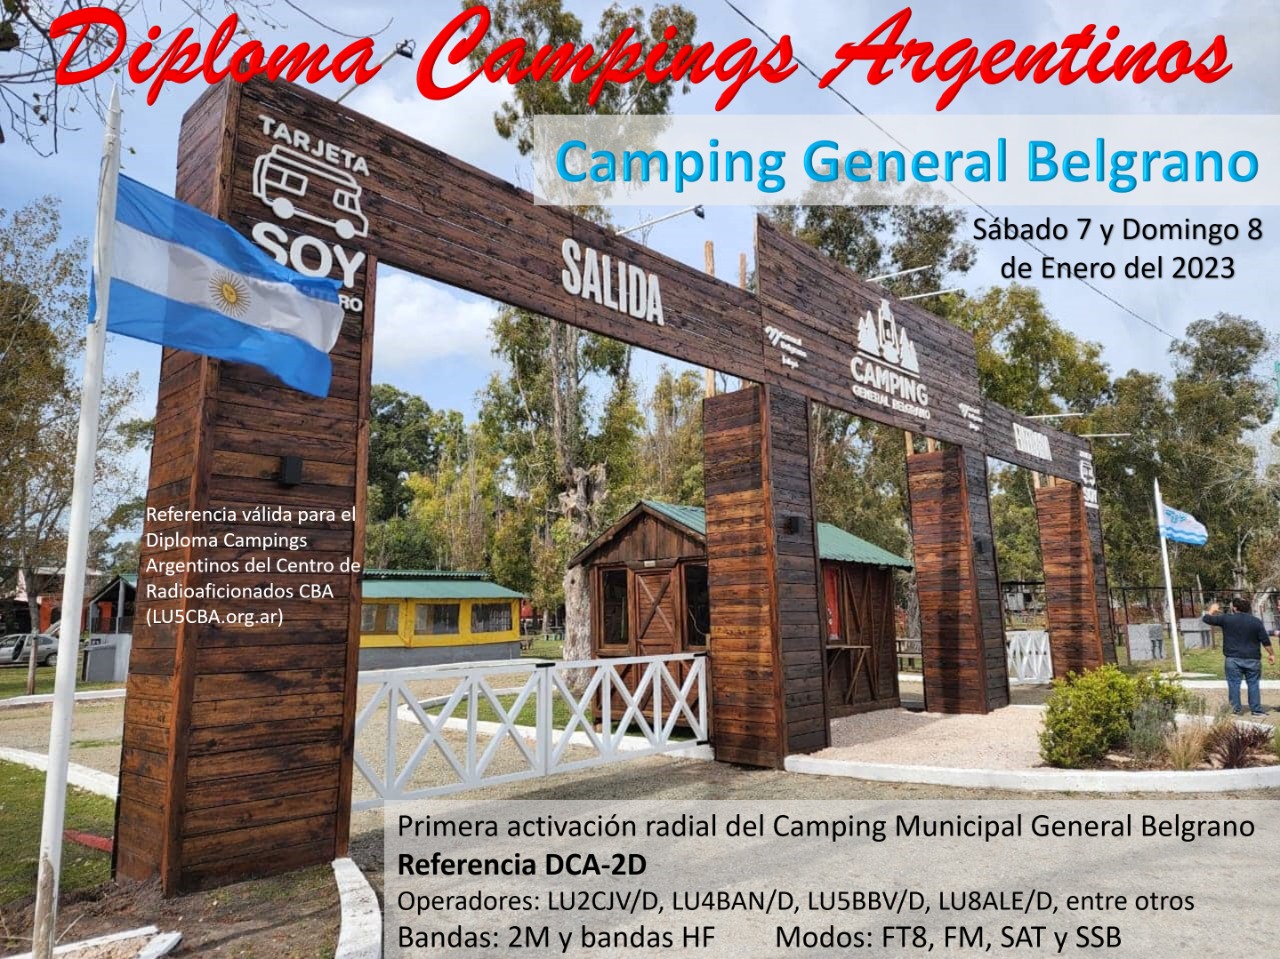 Diploma Campings Argentinos: Camping General Belgrano 